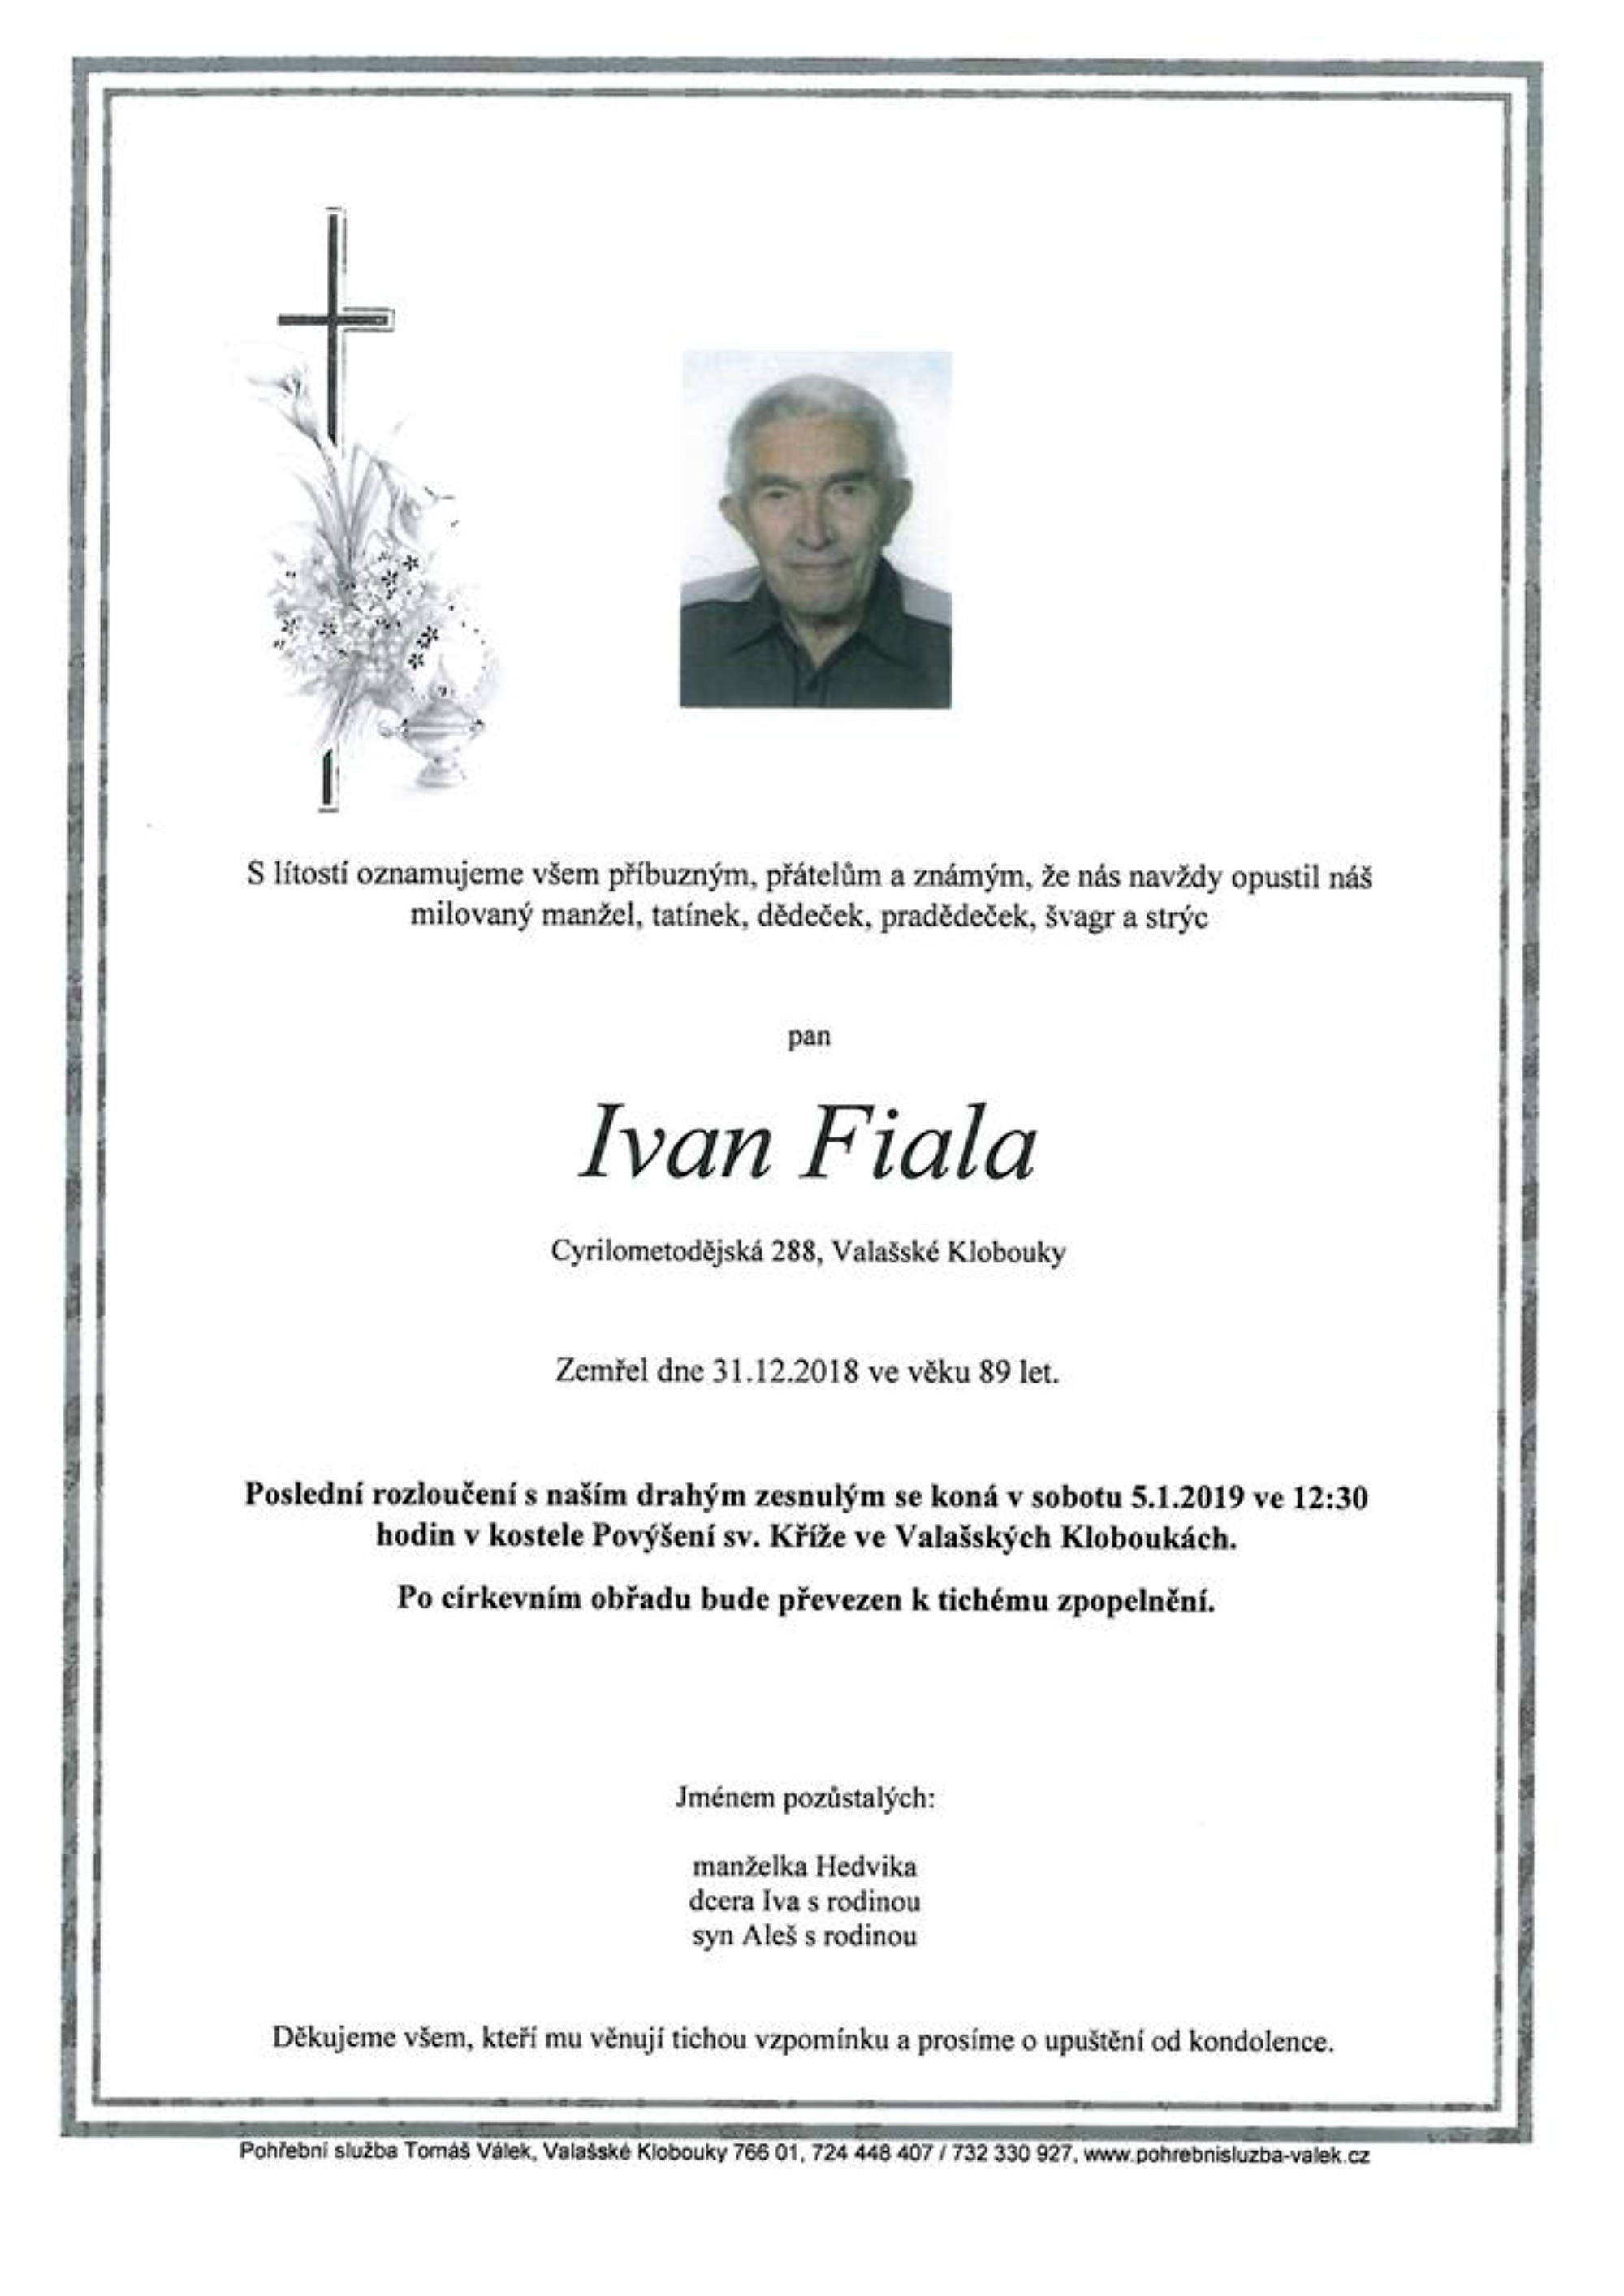 Ivan Fiala